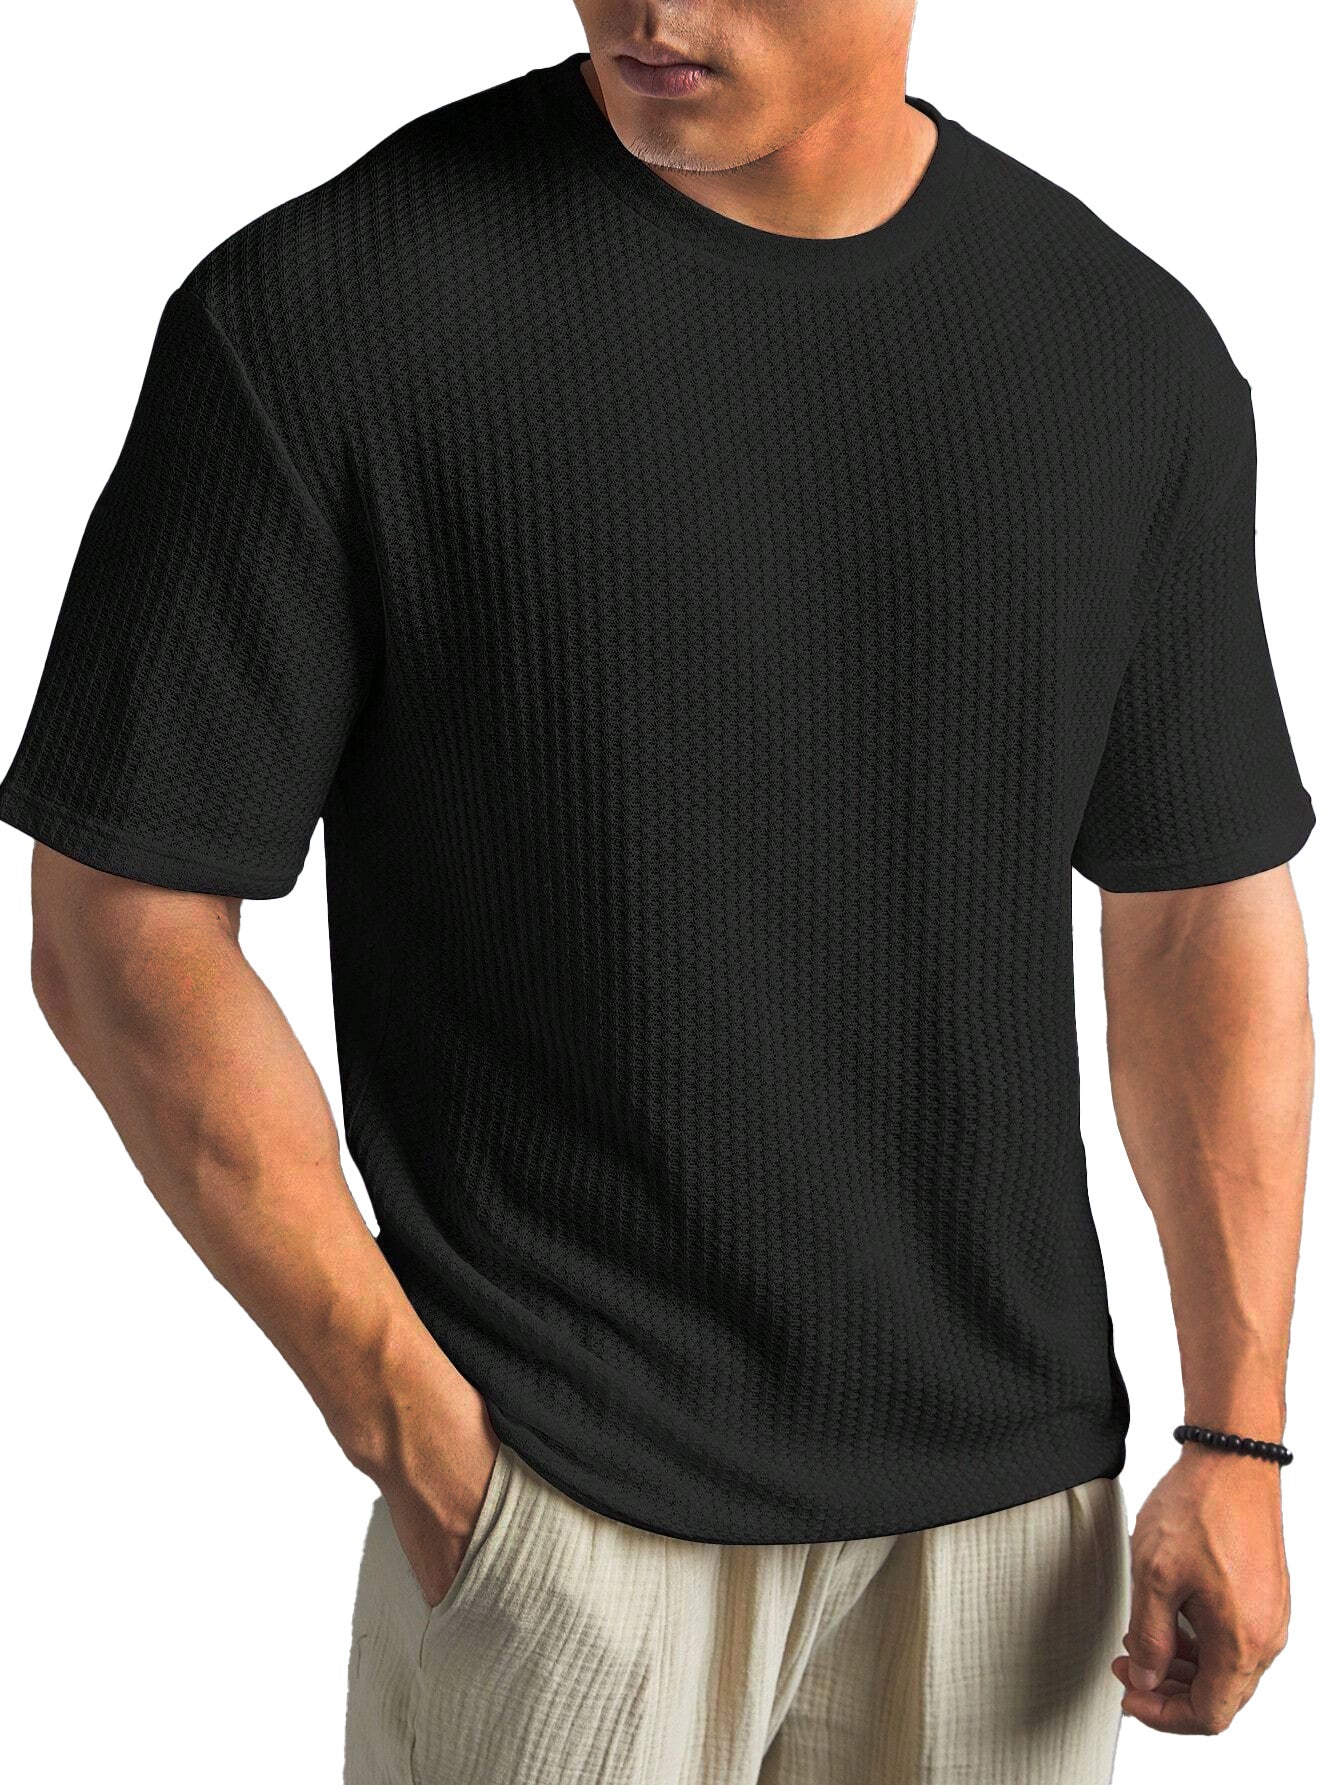 Casual Versatile Solid Color Men's Summer T-shirt